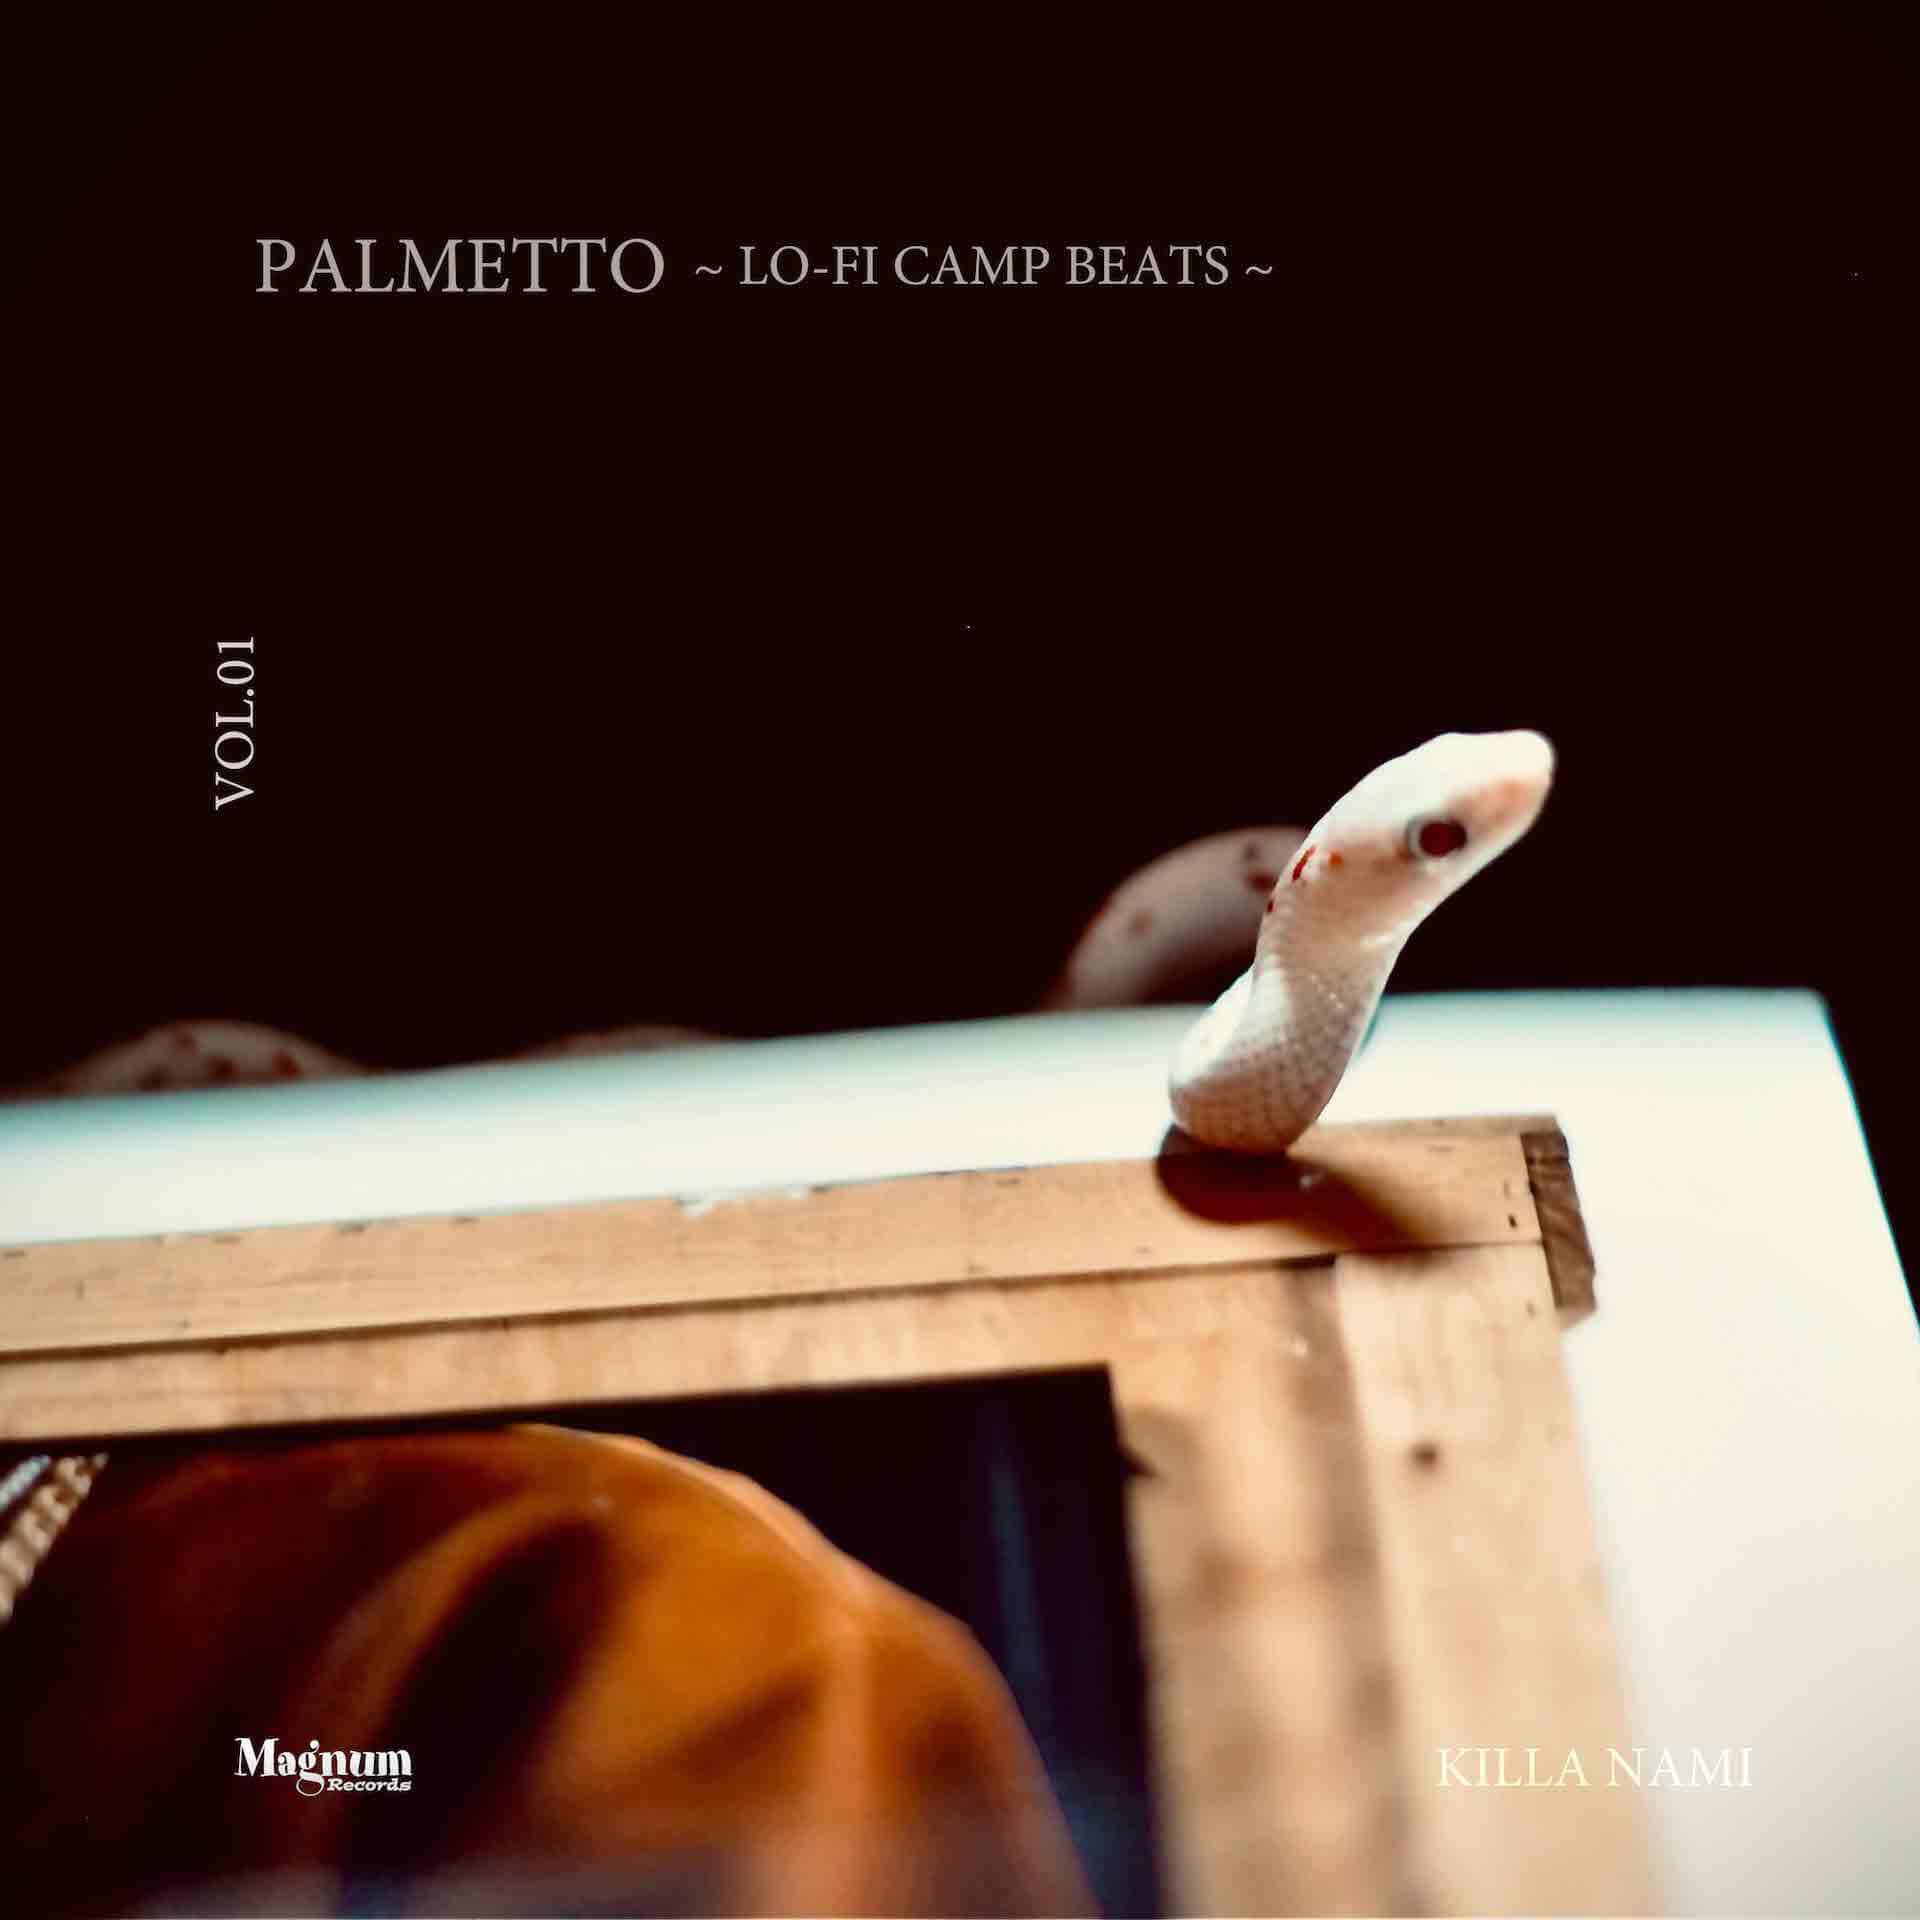 〈Magnum Records〉のKilla Namiが焚き火の音をサンプリングしたビートテープ『PALMETTO 〜LO-FI CAMP BEATS〜 VOL.01』を発表 music220120-killa-nami-2